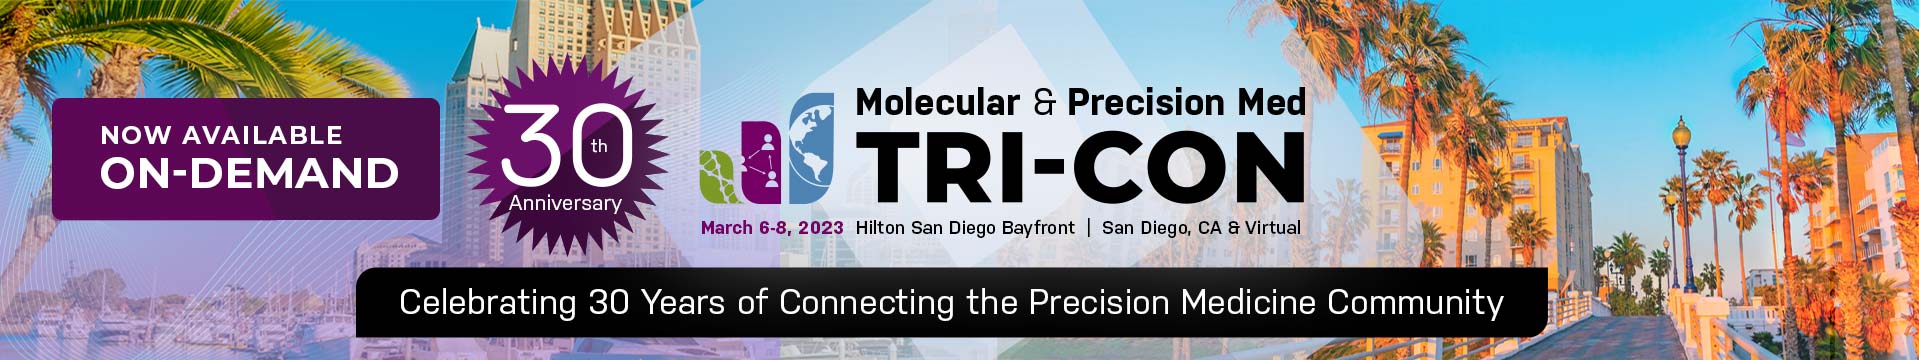 Molecular and Precision Med TRI-CON 2023 - San Diego, CA